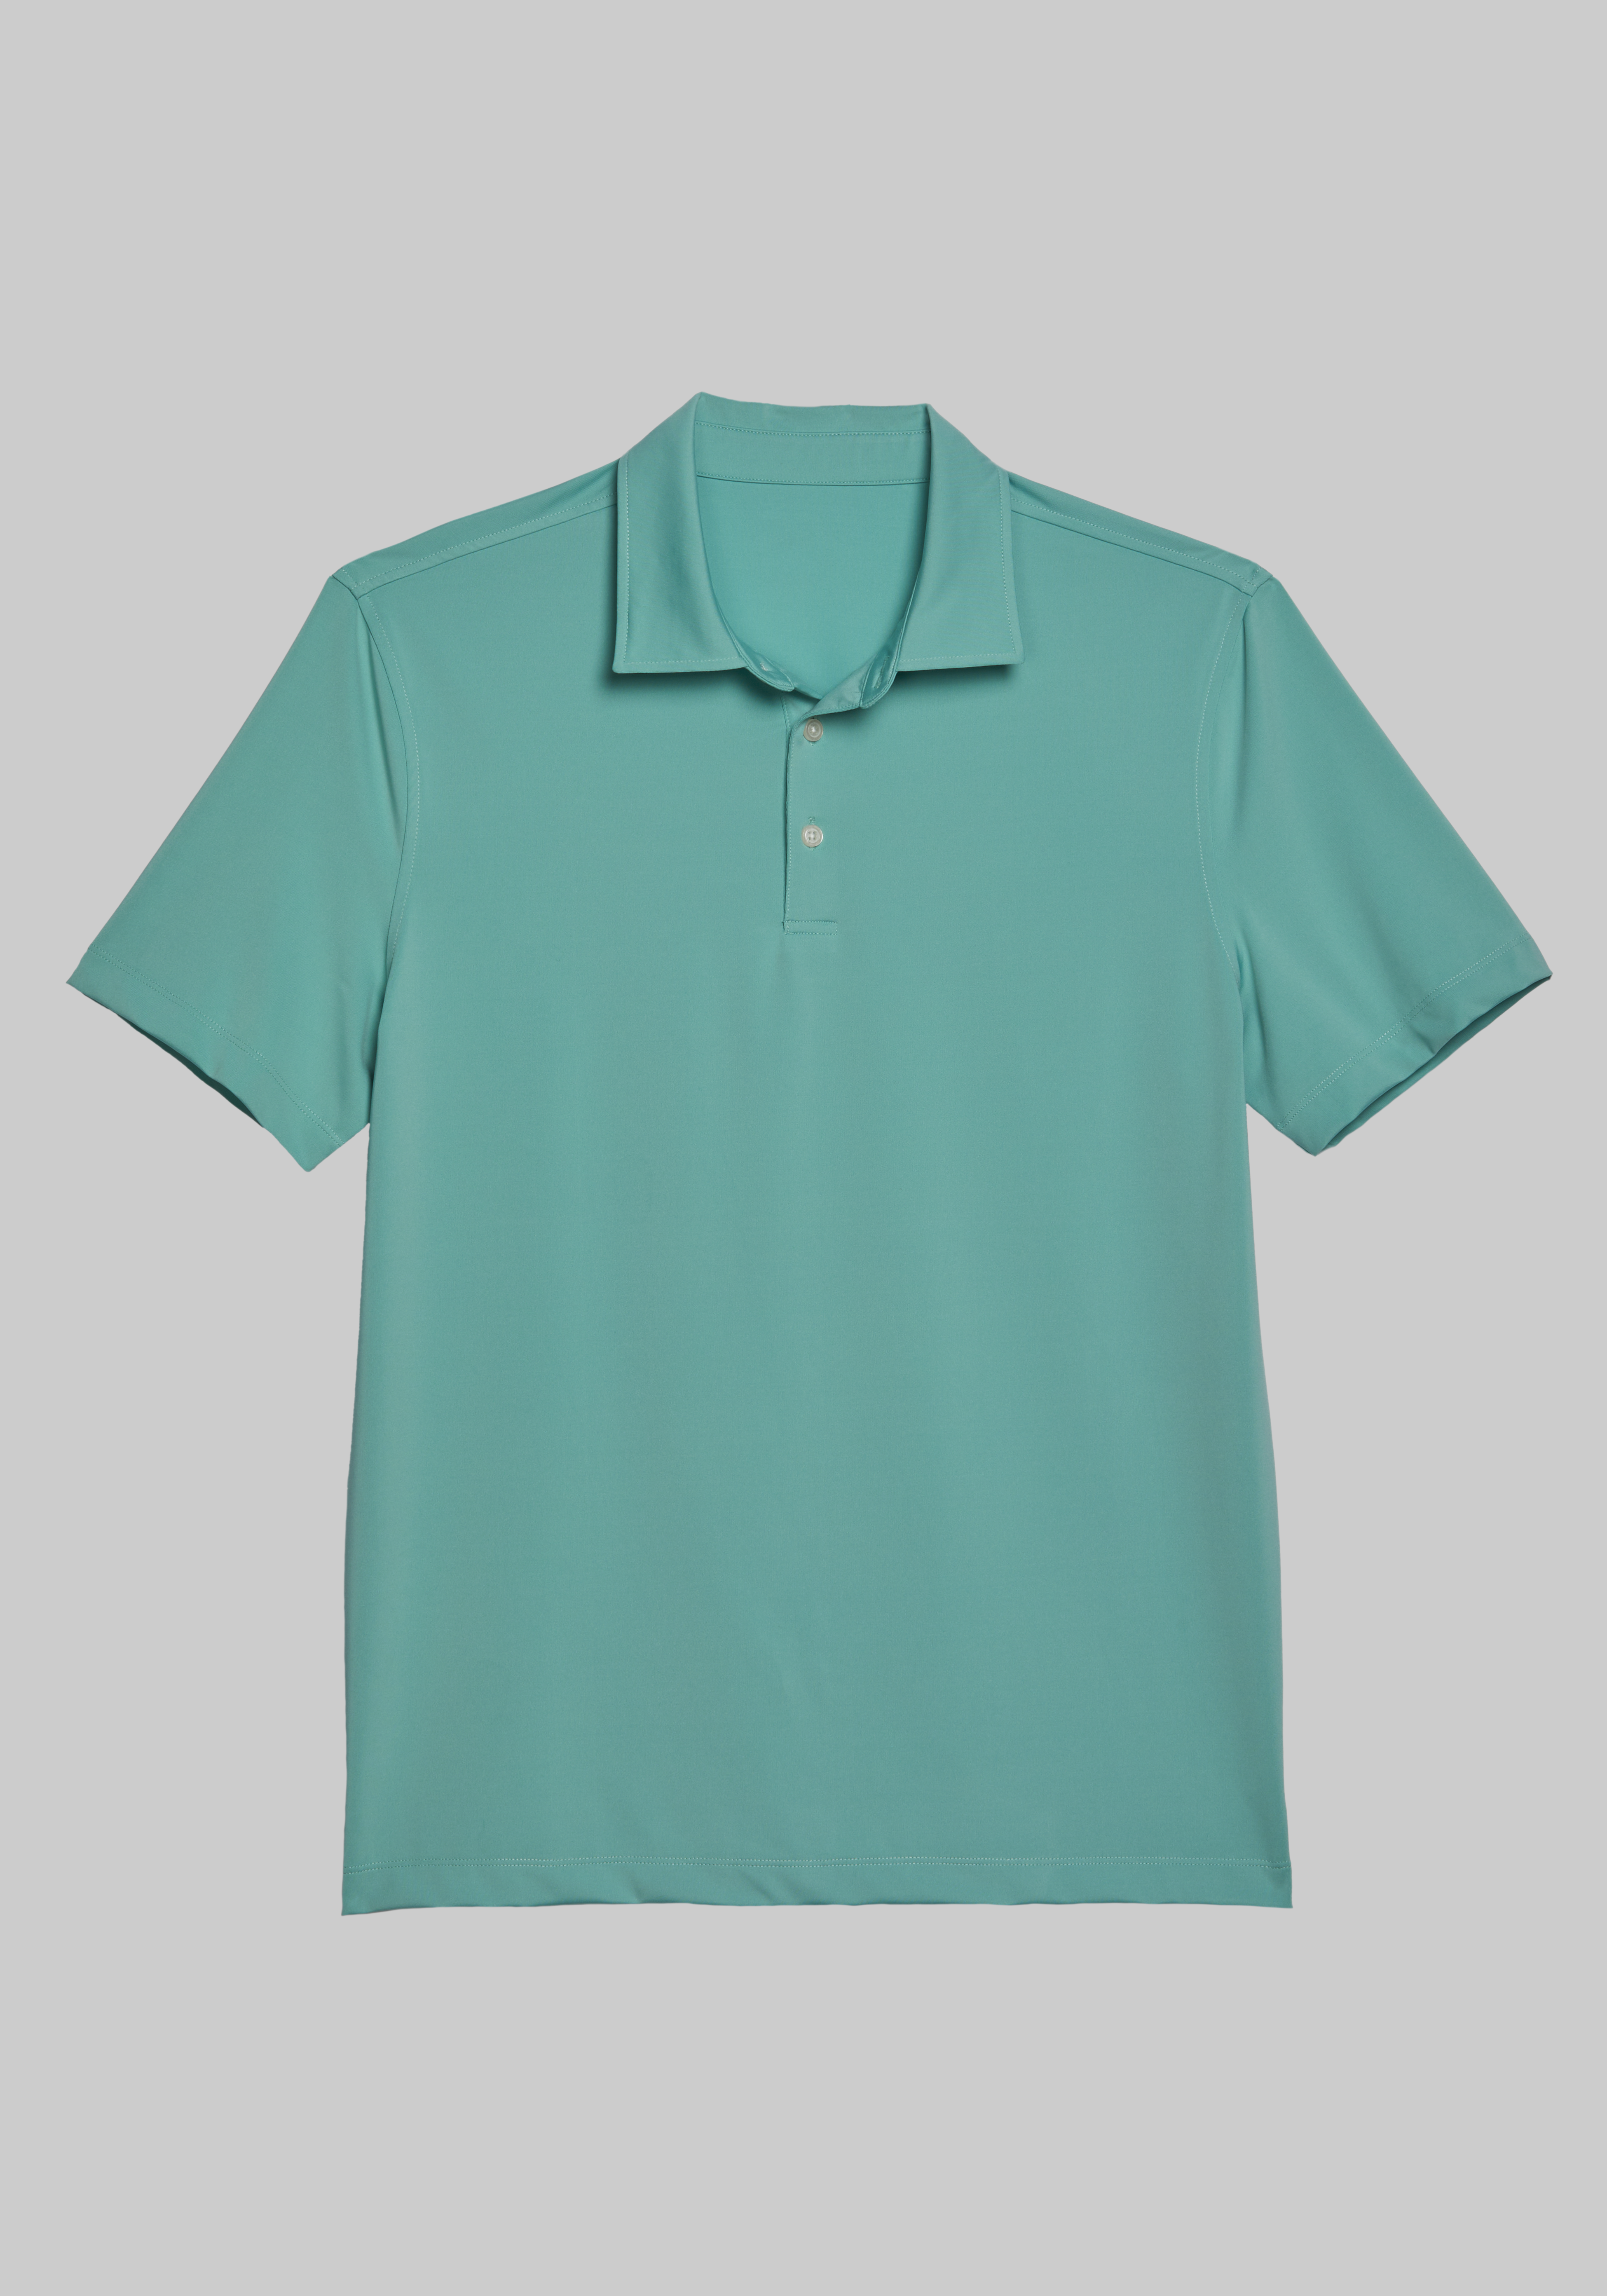 Polo Shirts & Knit Shirts, Men's Shirts